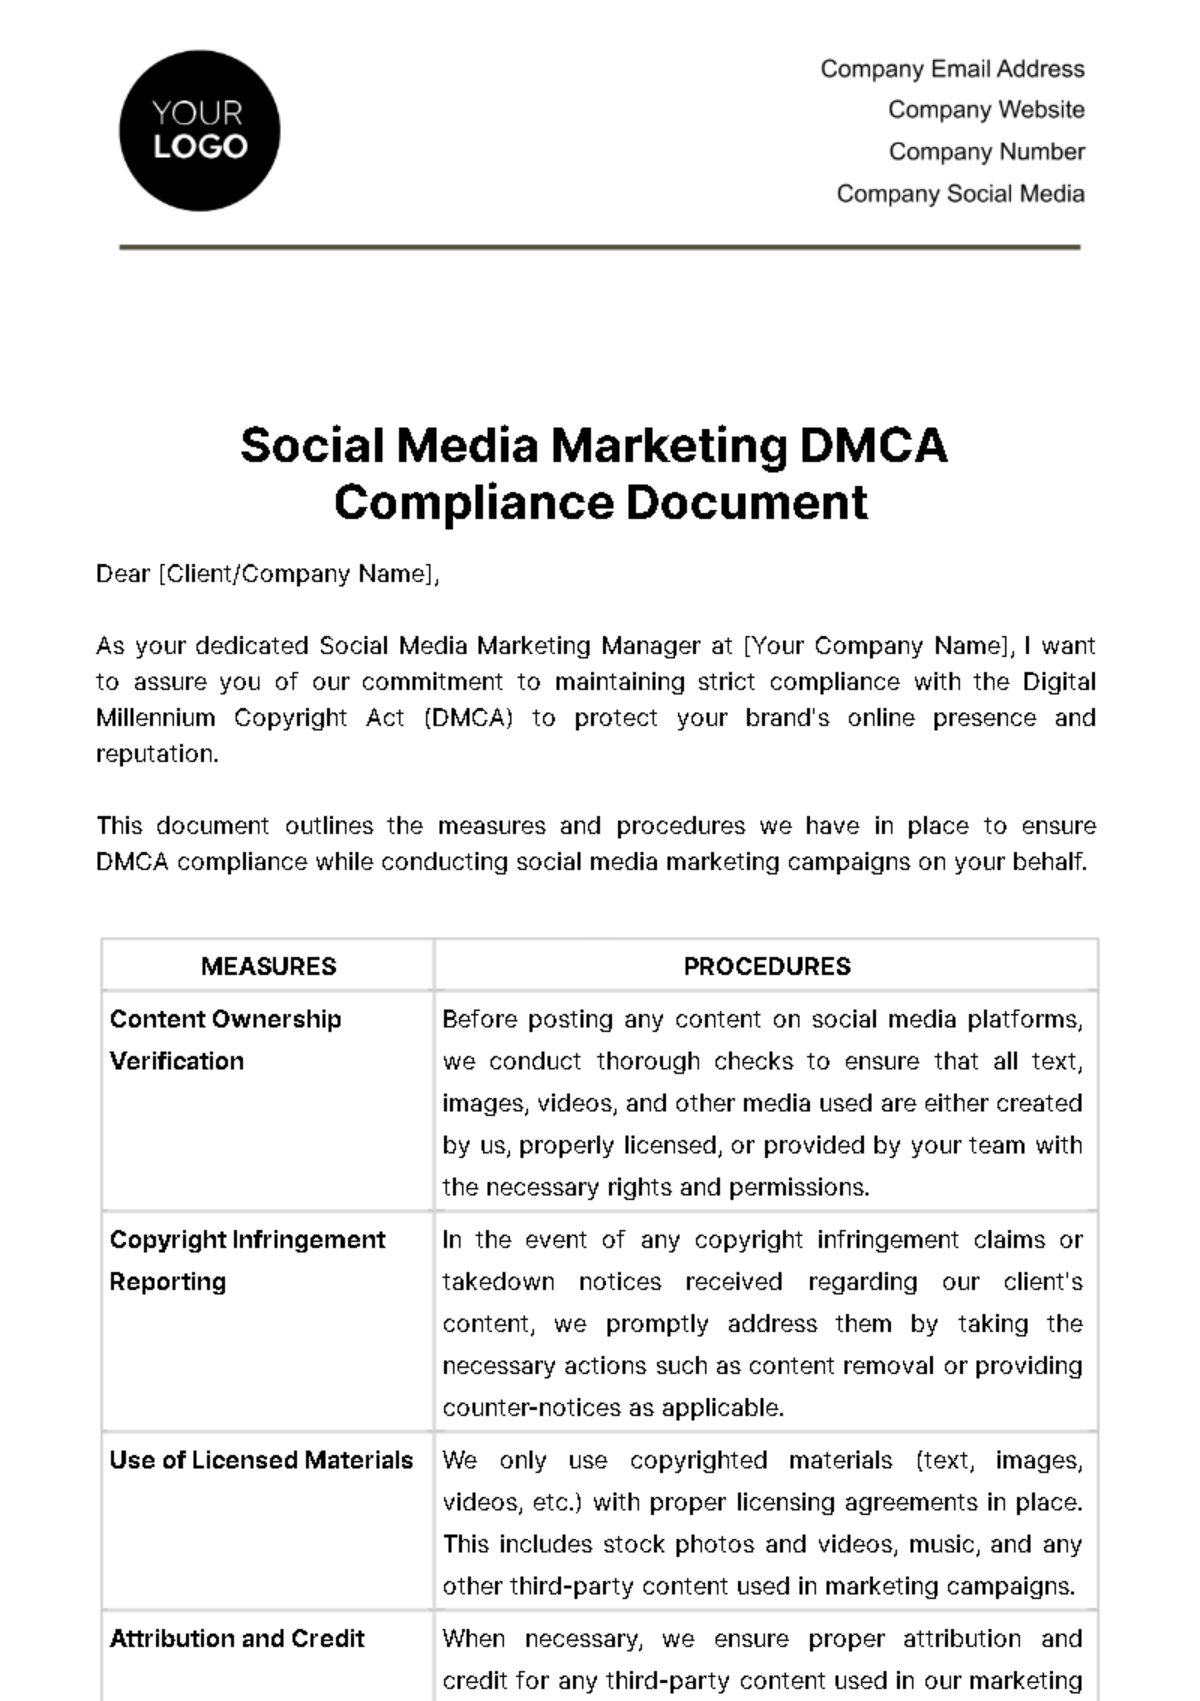 Free Social Media Marketing DMCA Compliance Document Template